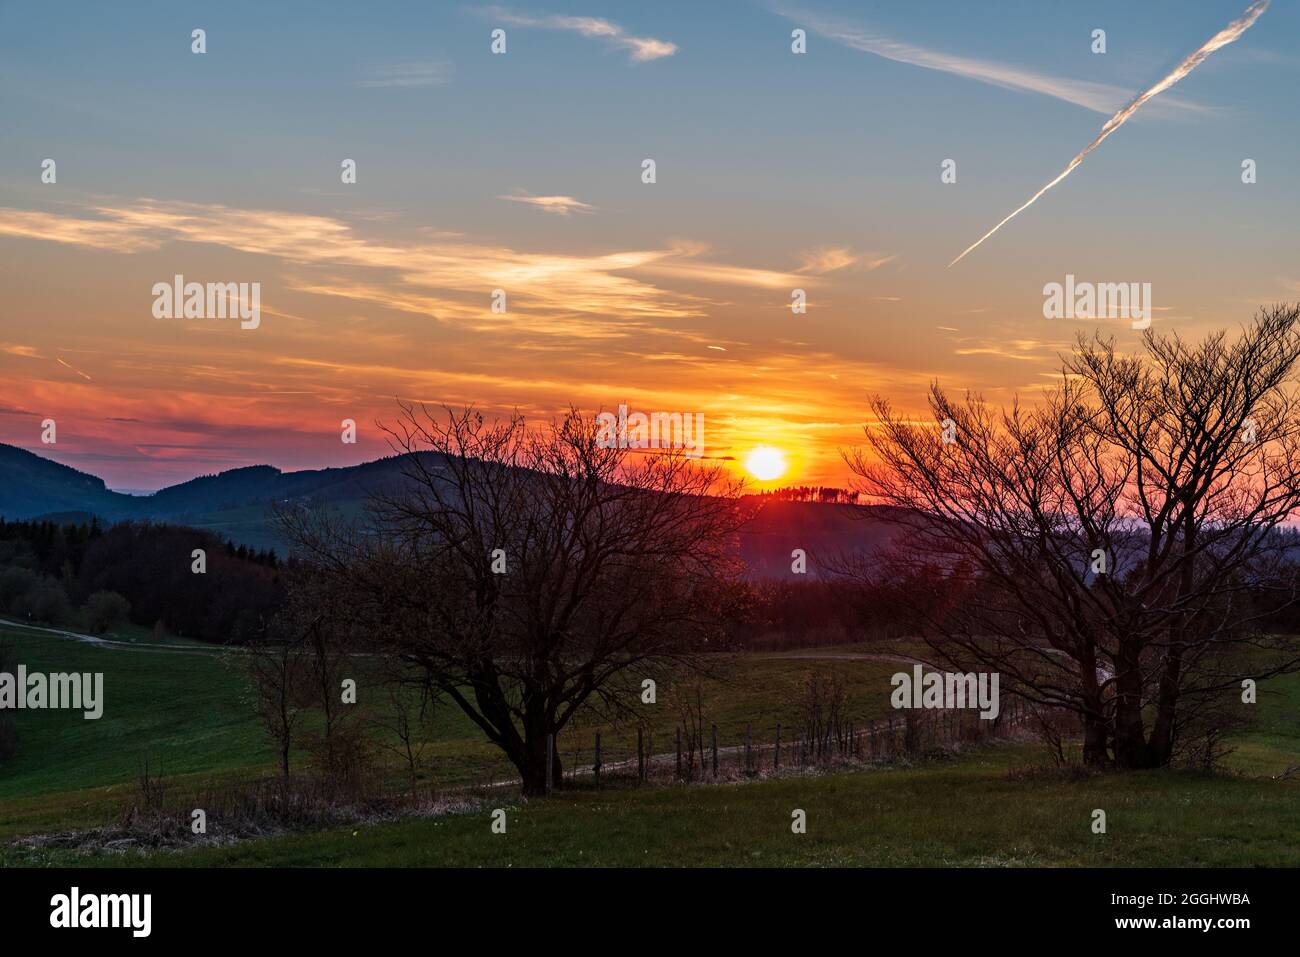 Sonnenuntergang drom Machnac Hügel in Biele Karpaty Berge in der Slowakei mit Hügeln, bunten Himmel, Bäumen und Wiesen Stockfoto